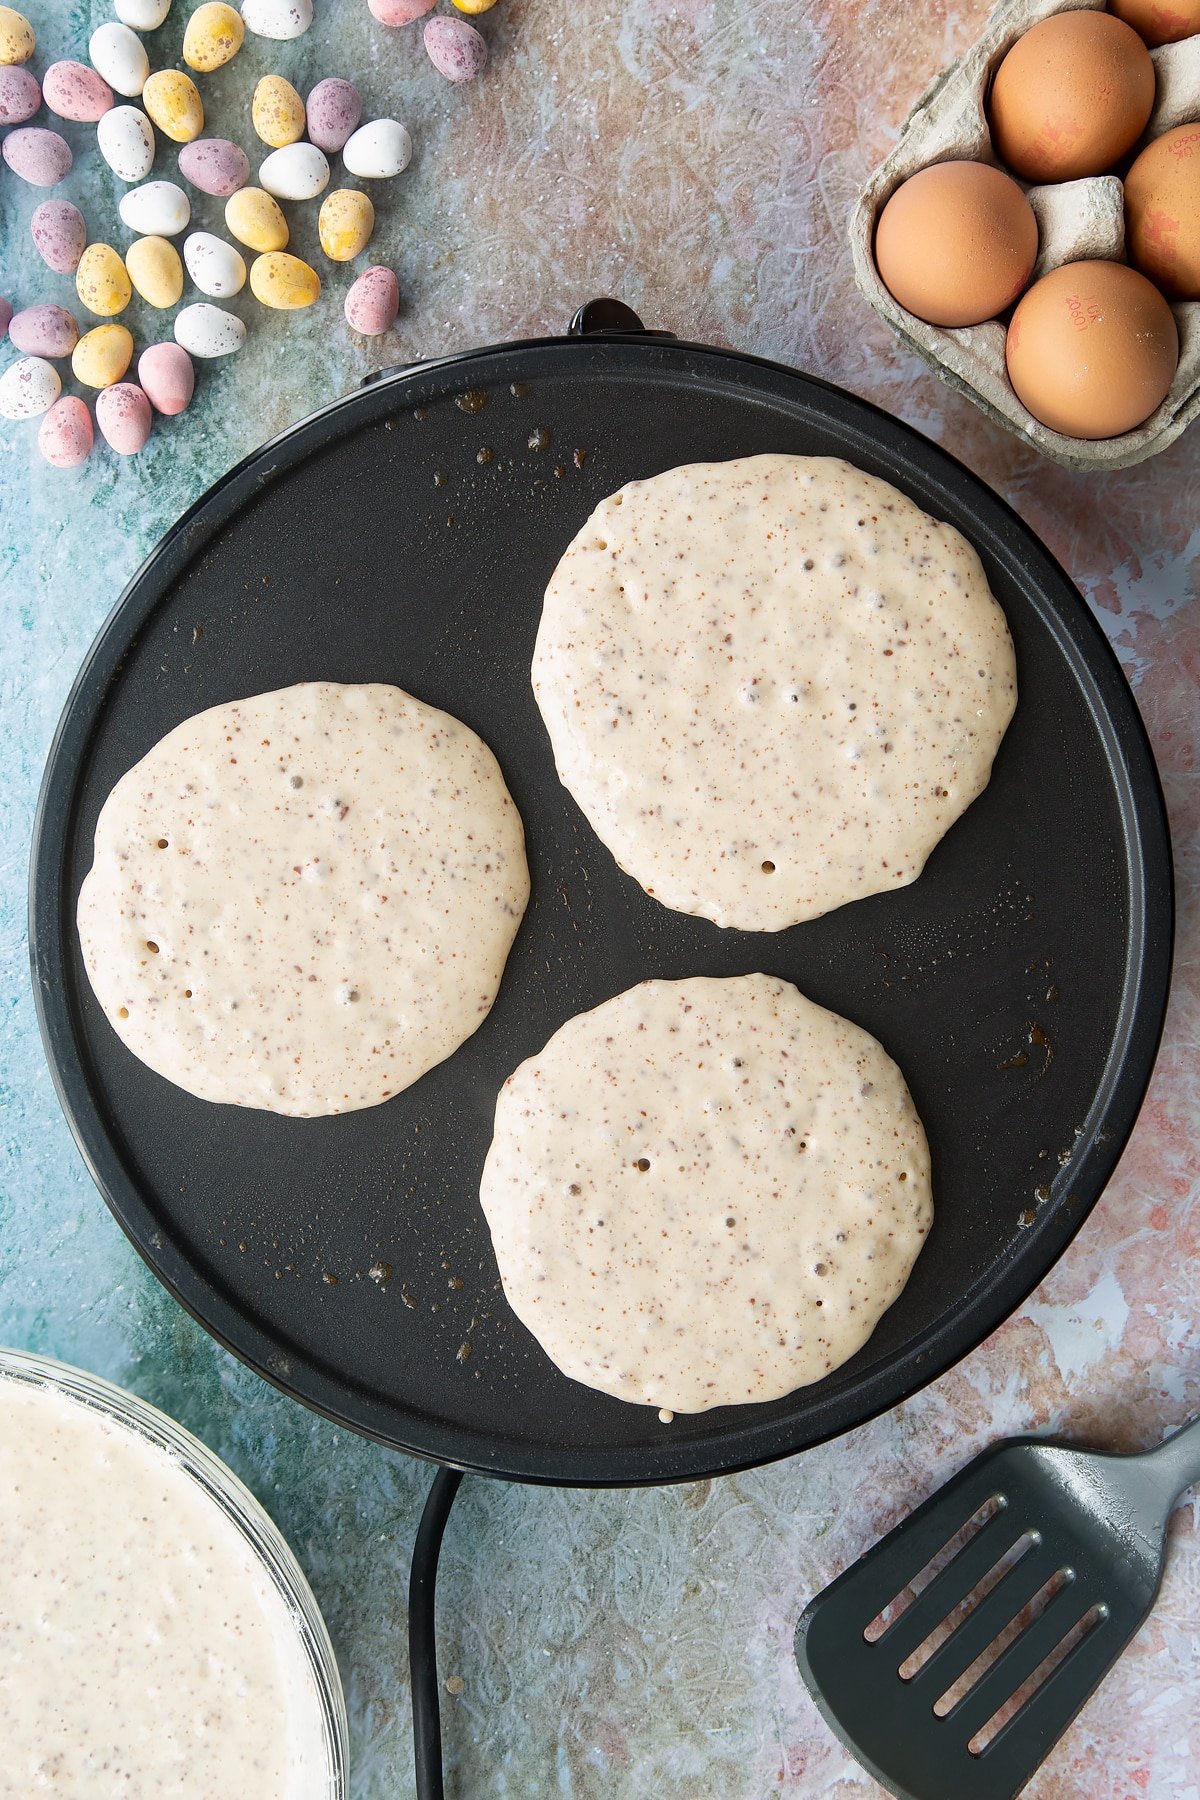 Spoonfuls of bubbling Mini Egg pancake batter on a hot pan. Ingredients to make Mini Egg pancakes surround the pan.